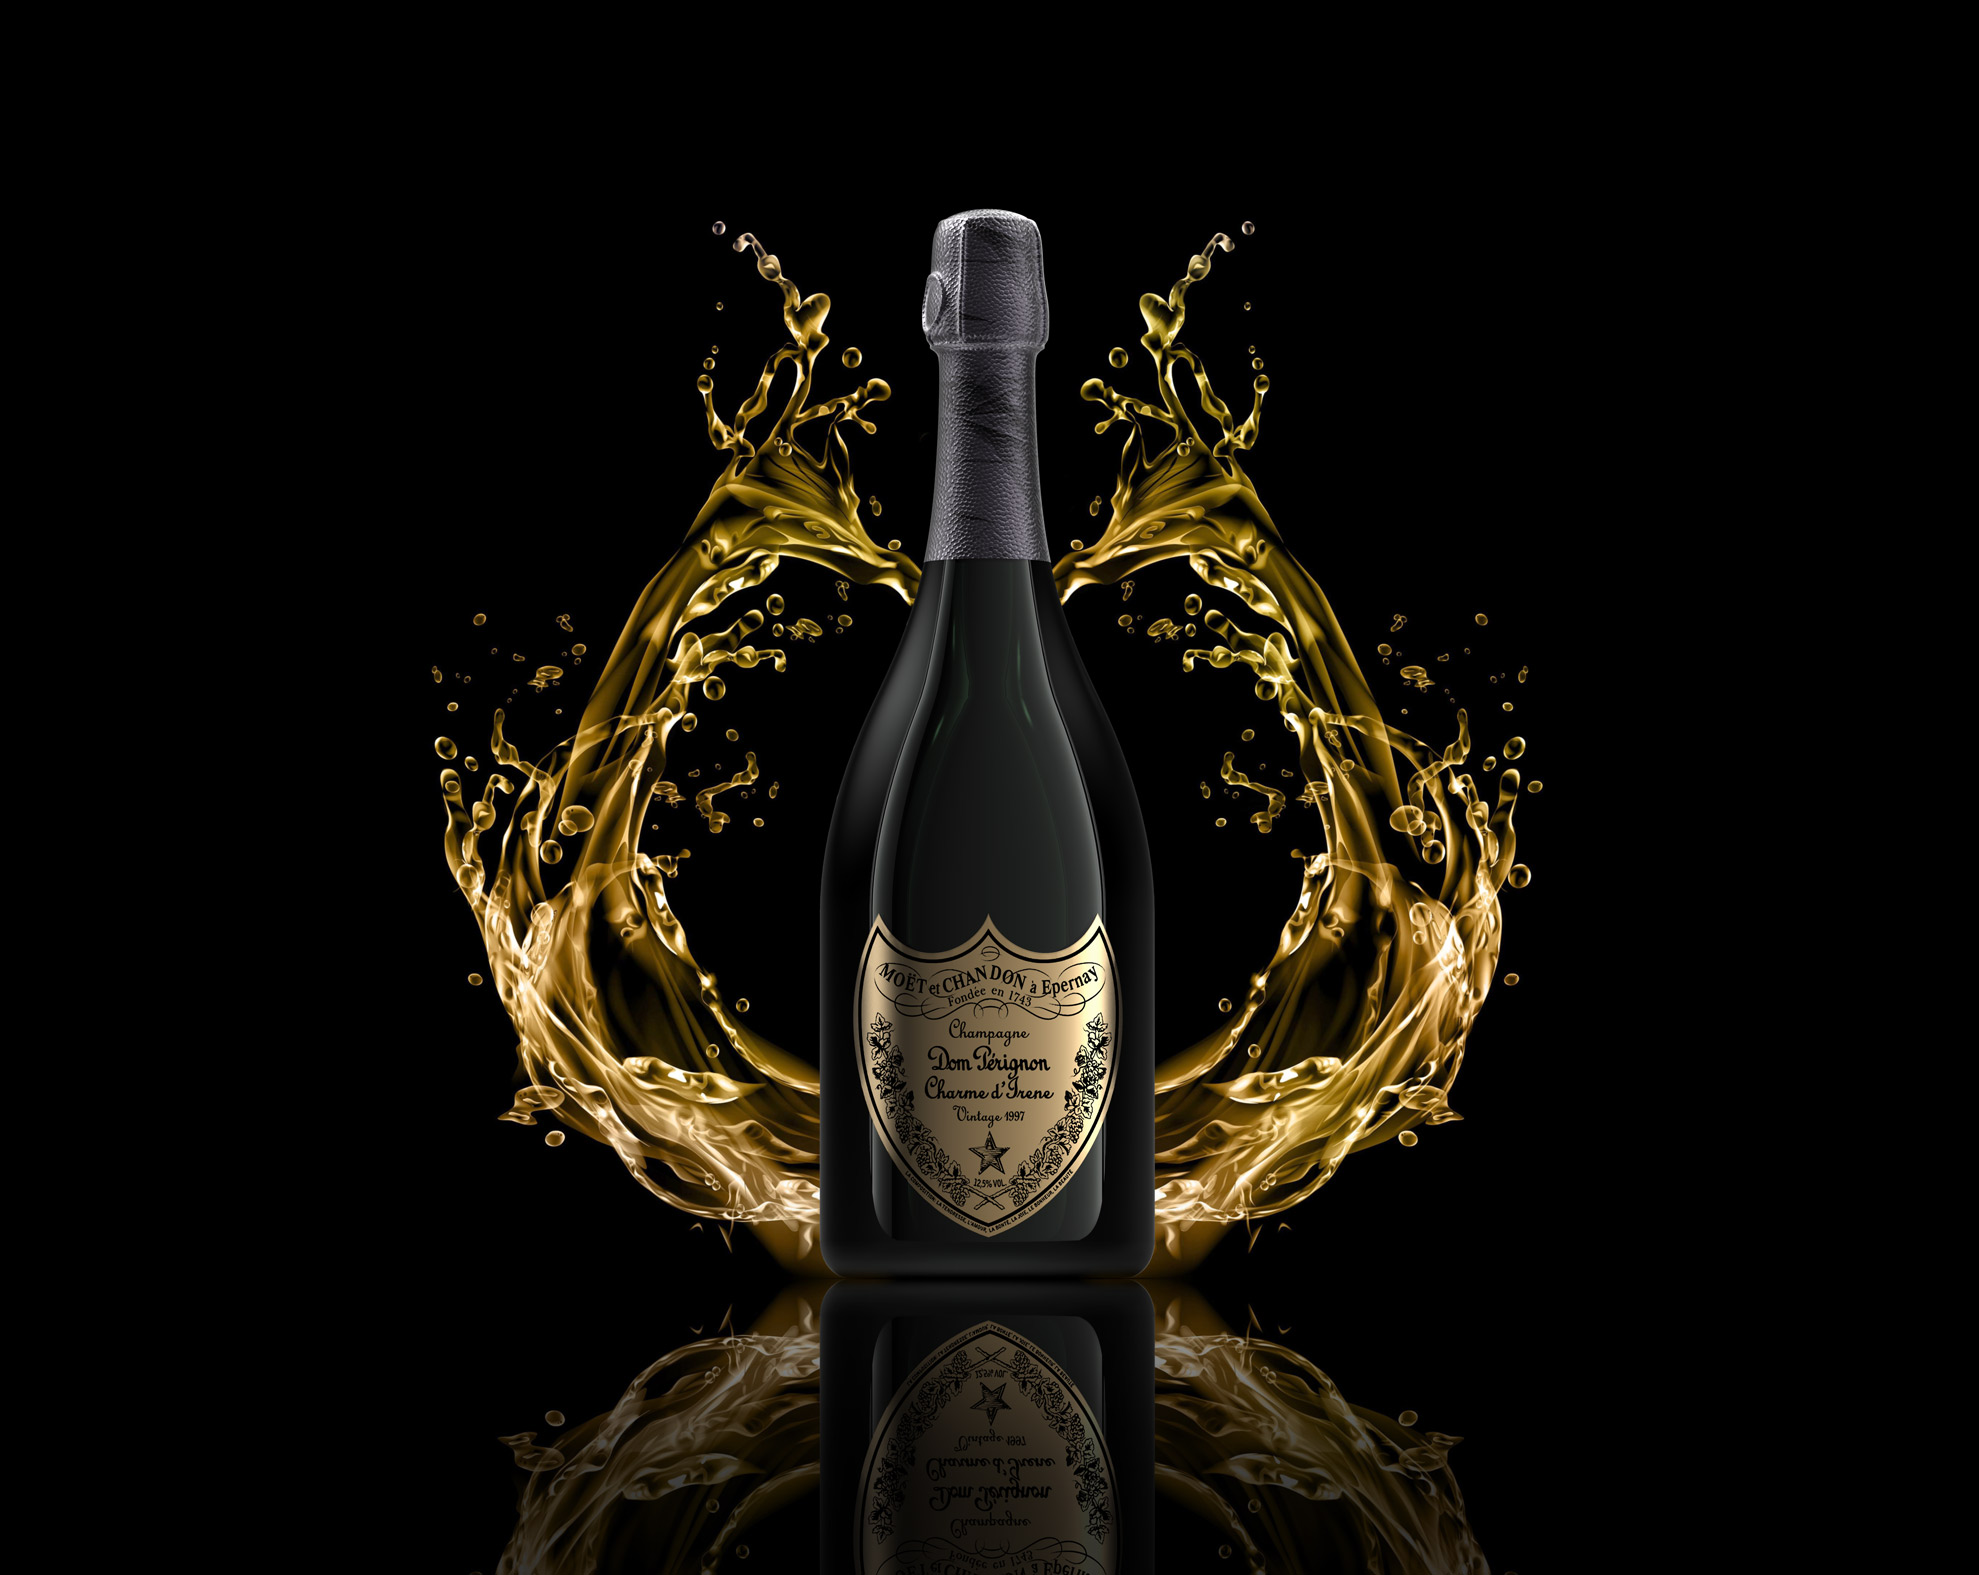 Dom Pérignon- The taste of luxury